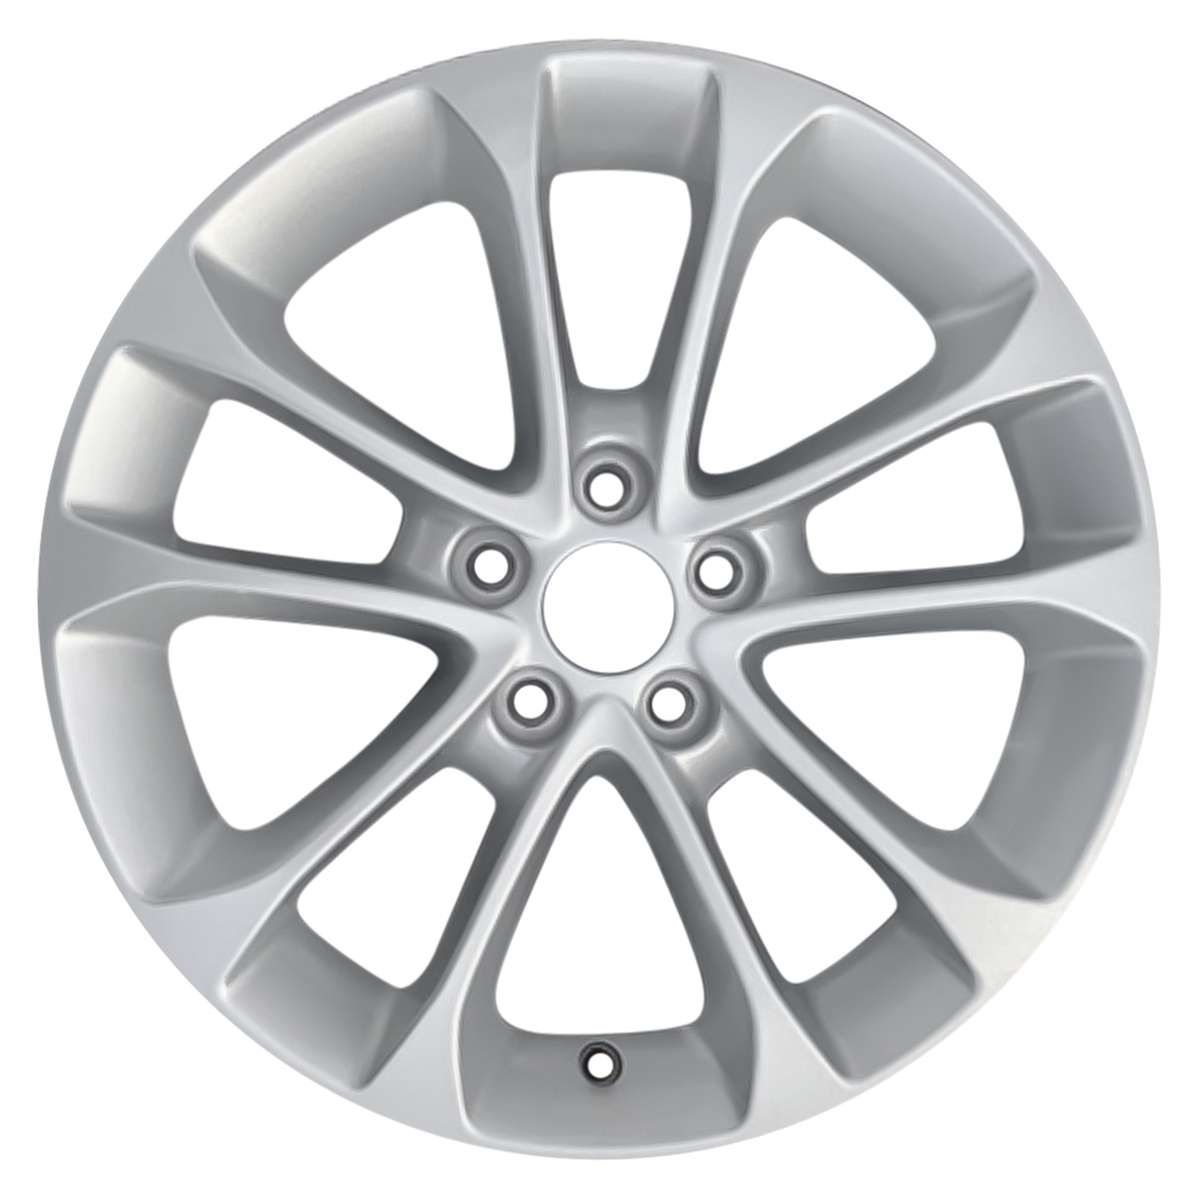 2020 Ford Fusion 17" OEM Wheel Rim W10205S